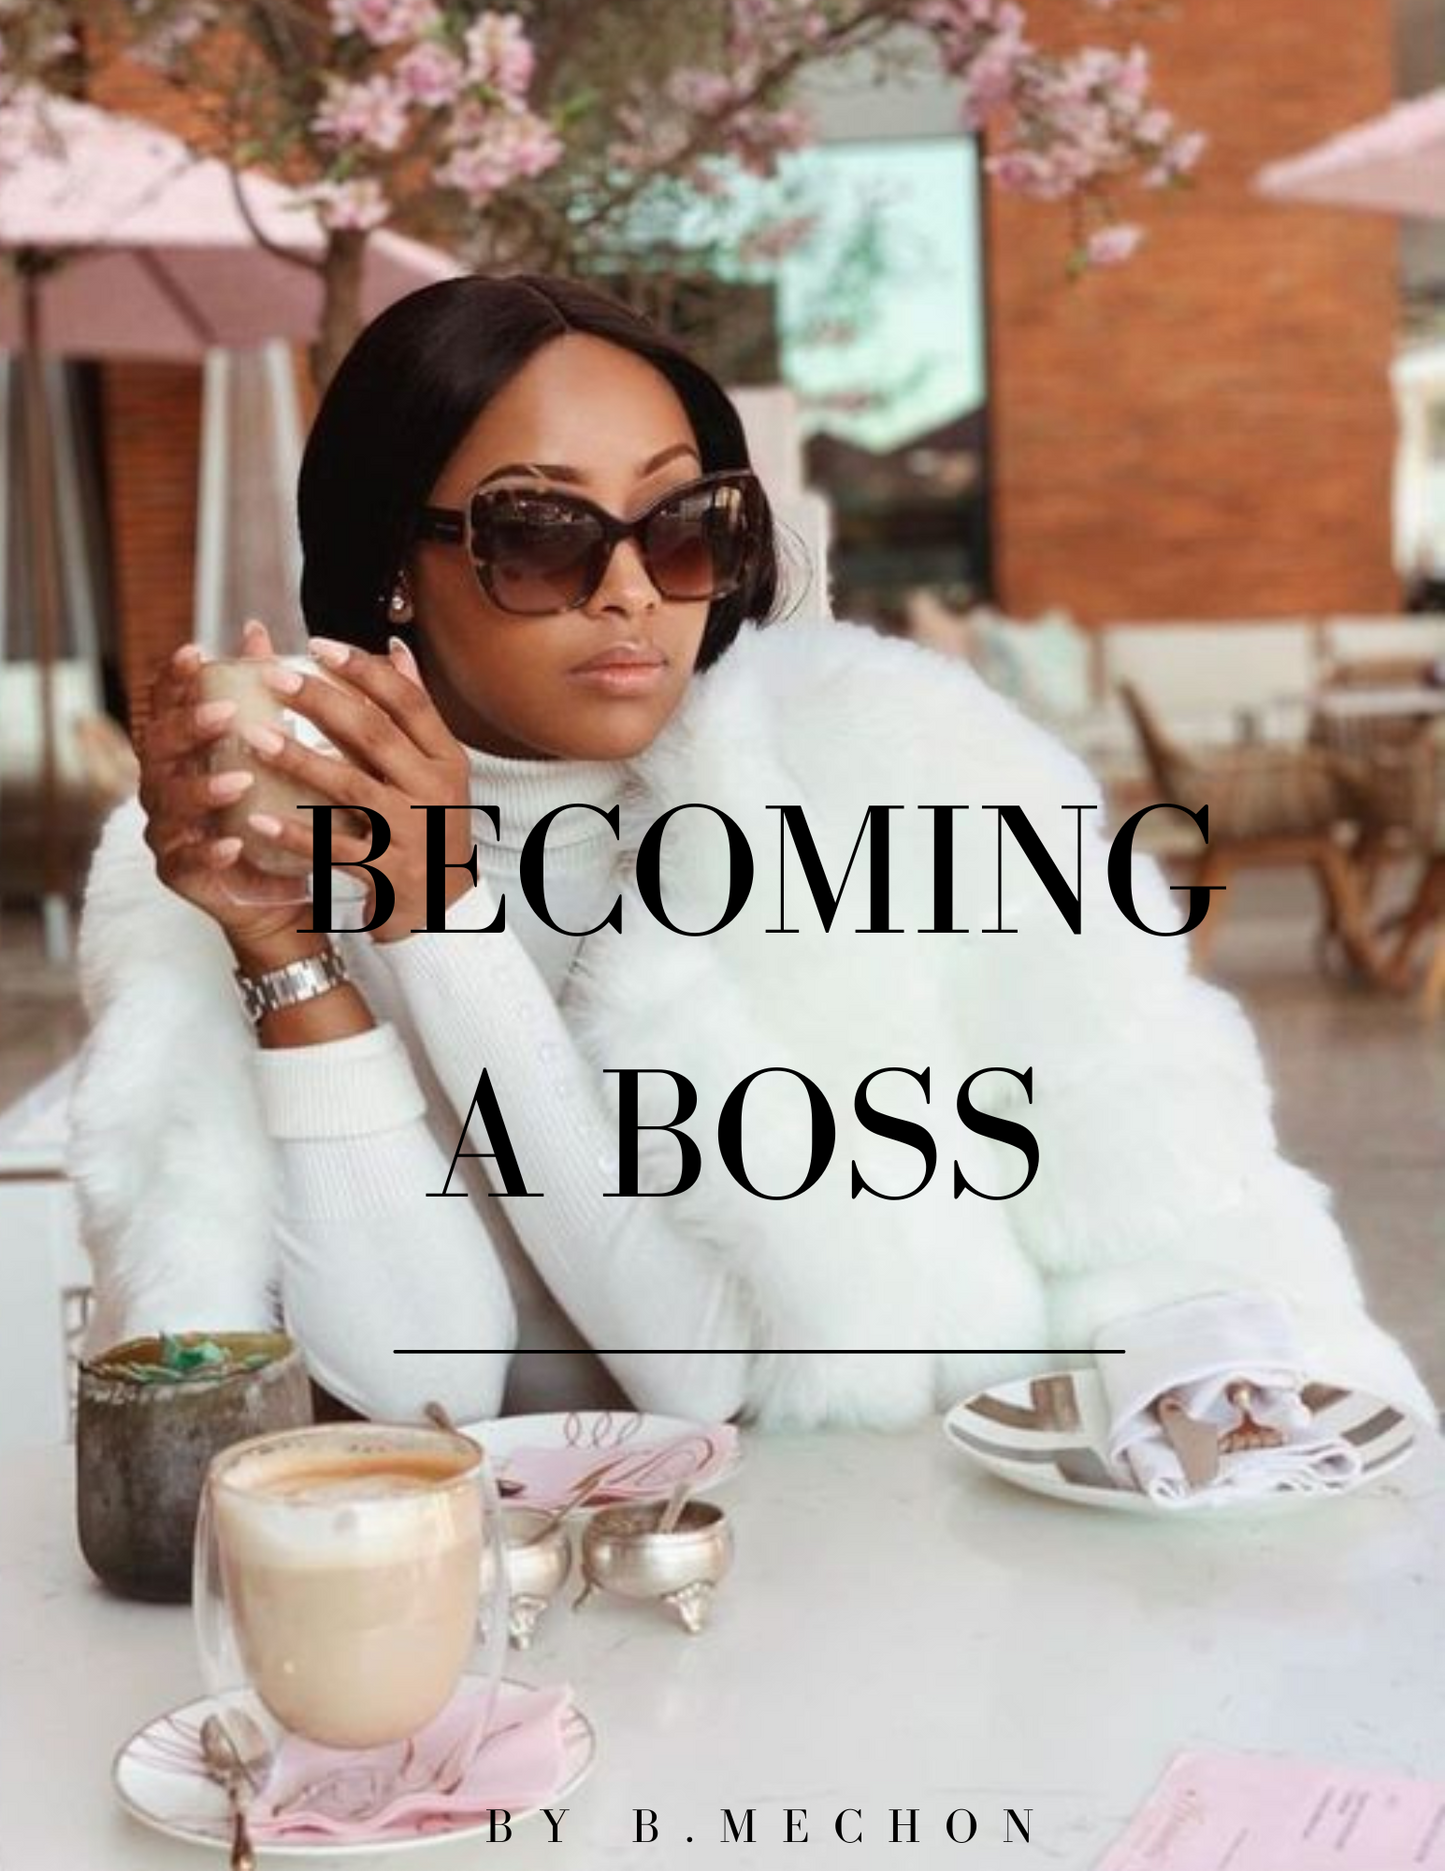 Becoming A Boss by B.Mechon